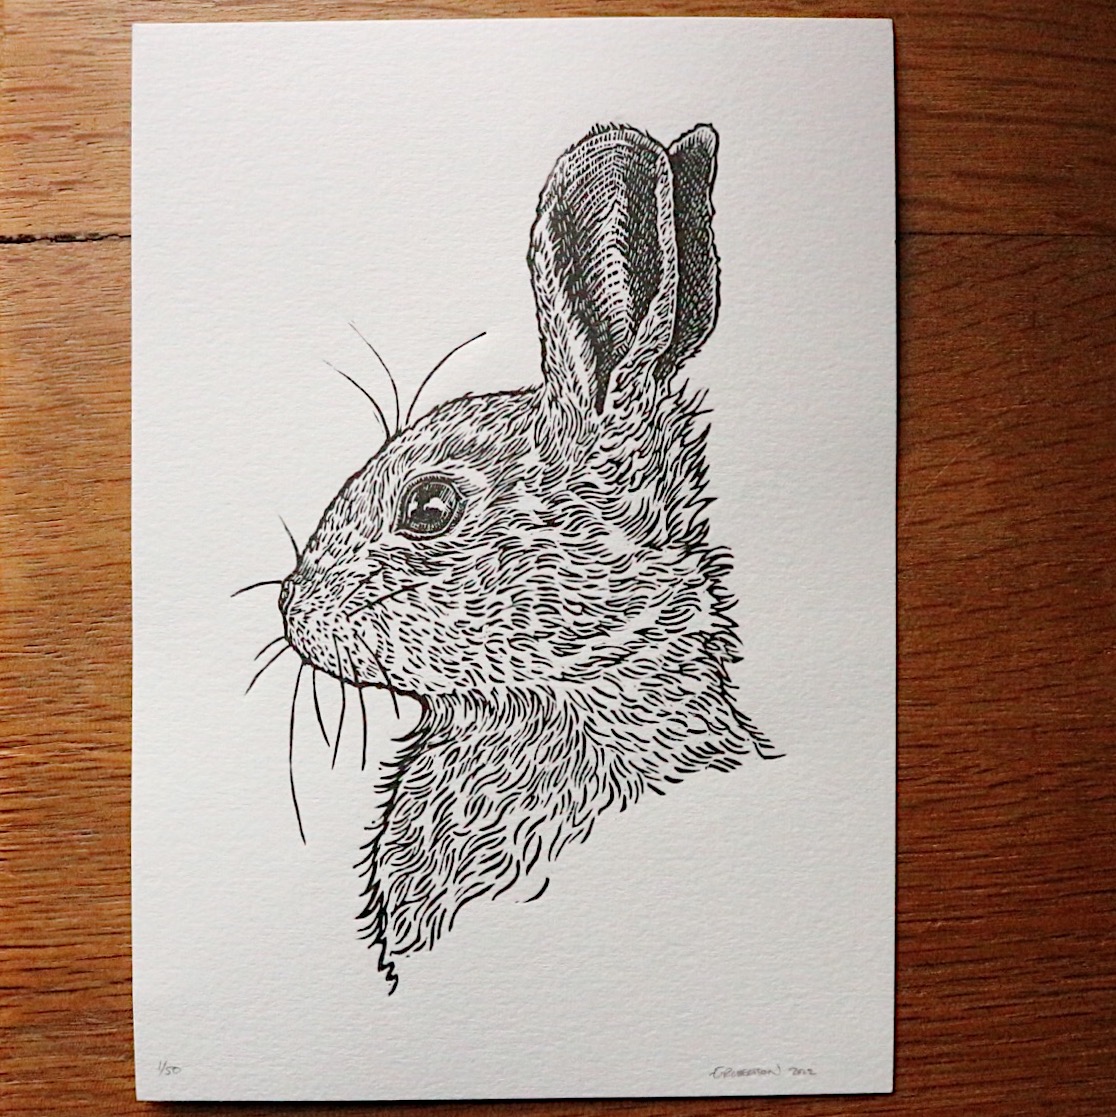 Lino print of a rabbit, black on white by Lino print artist and tutor Emily Robertson.